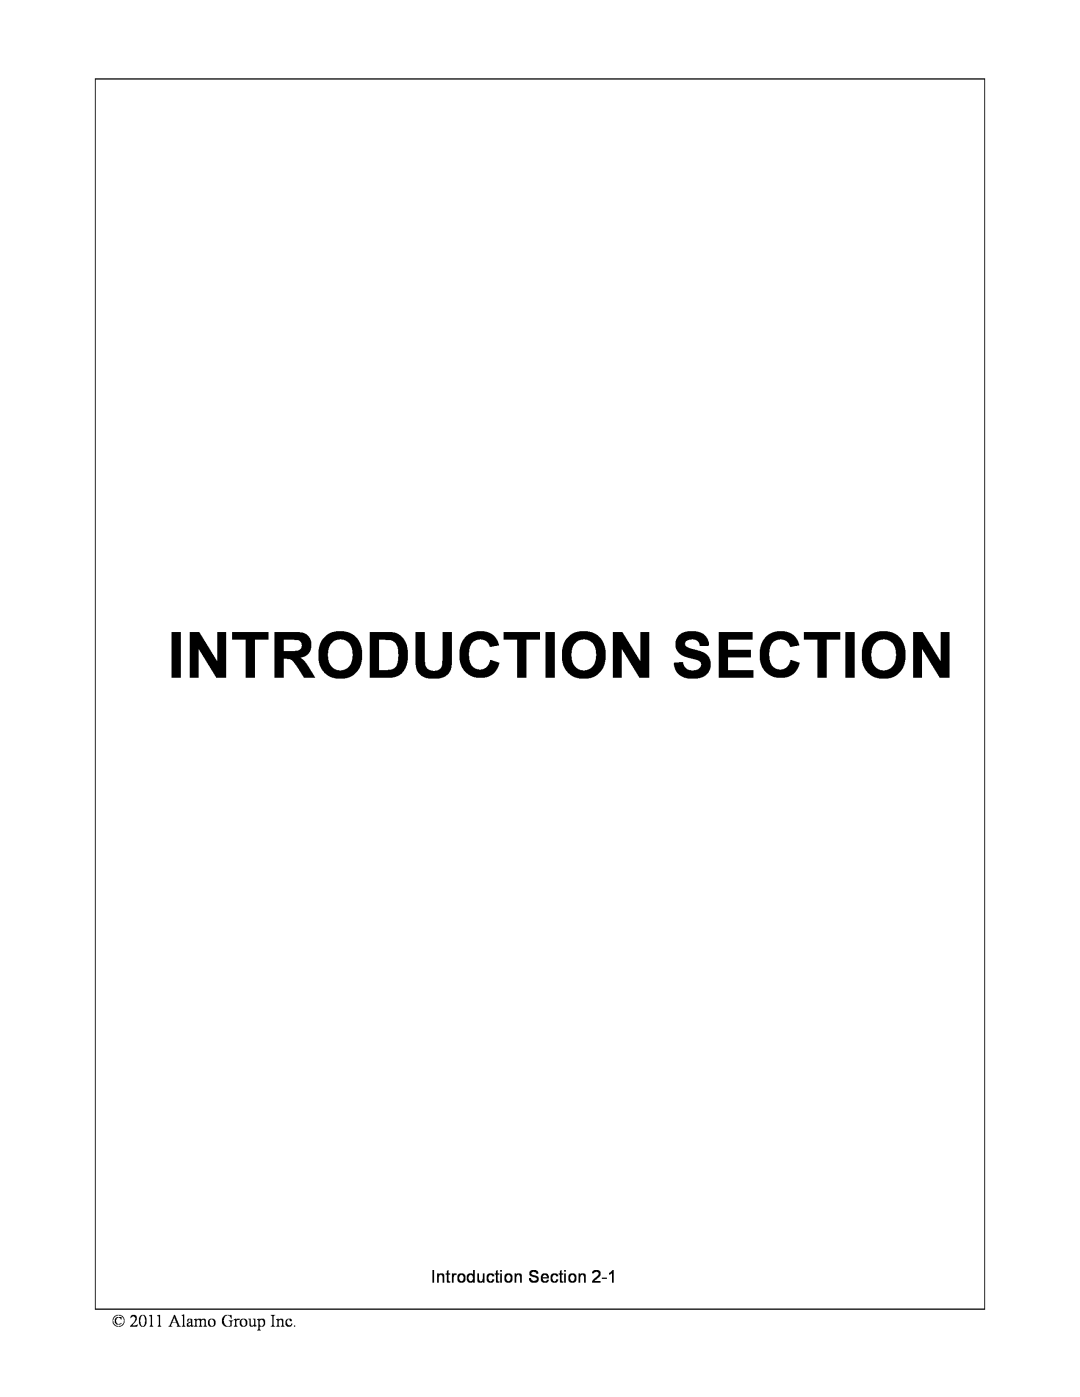 Alamo 1900 manual Introduction Section 